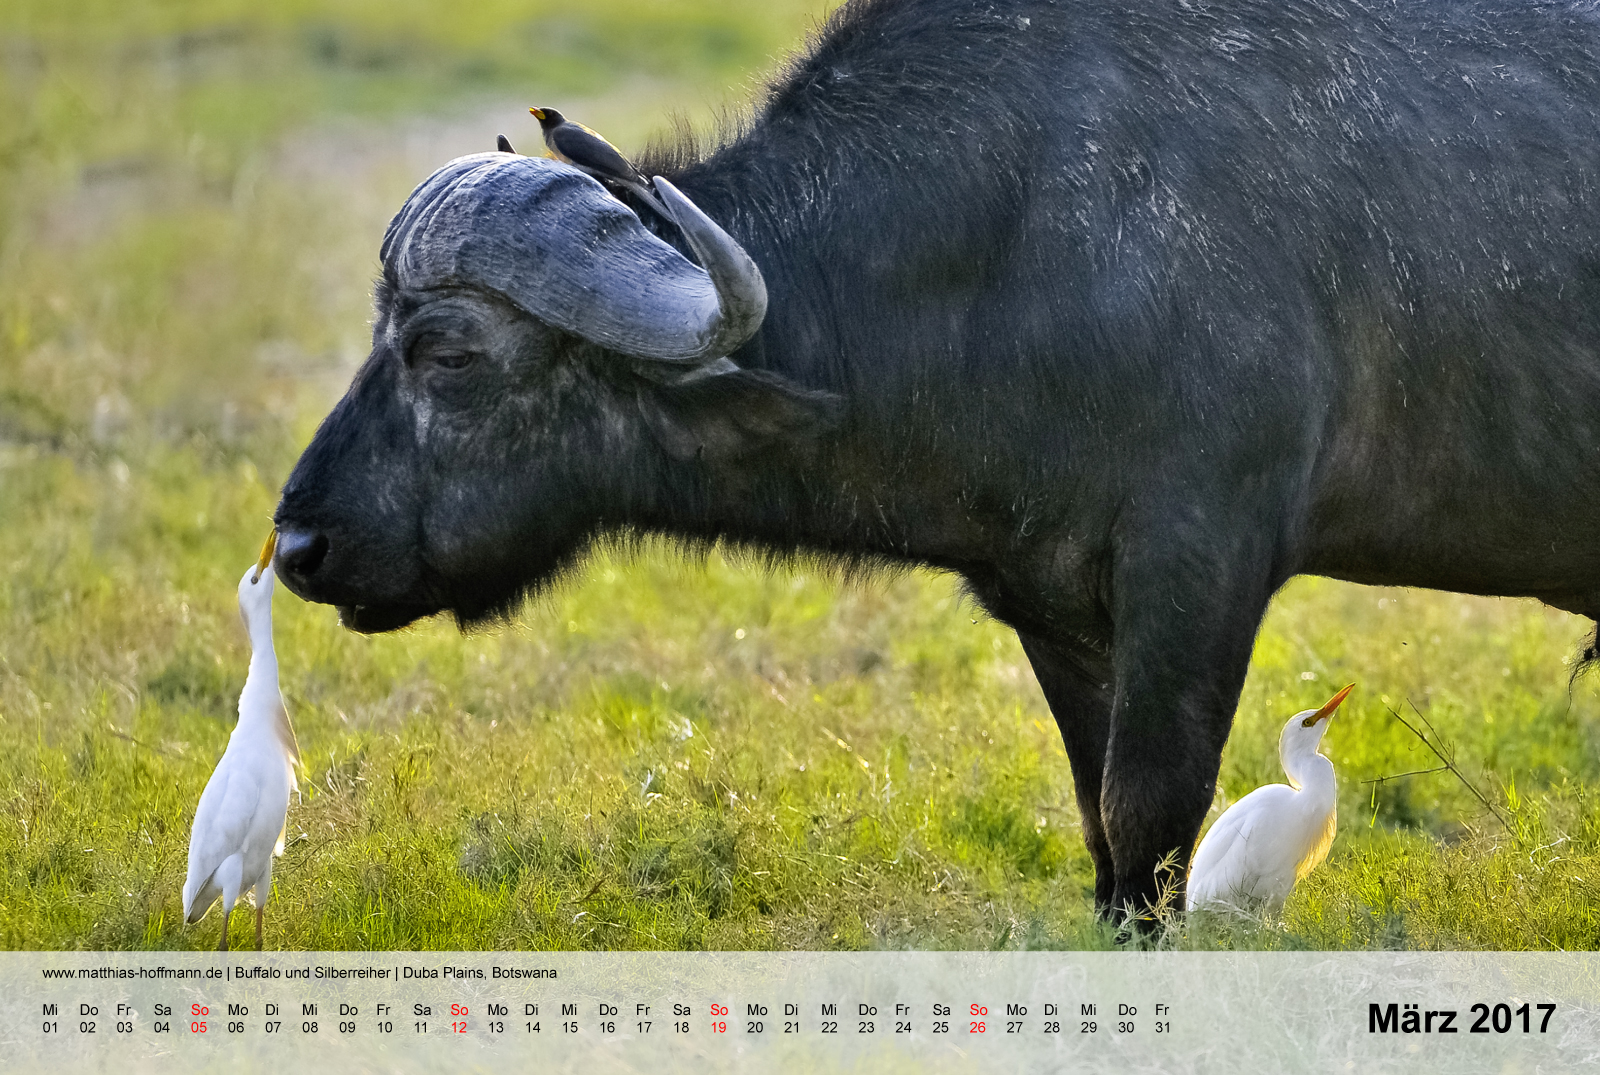 Buffalo und Silberreiher | Duba Plains, Botswana | Kalender 2017 - März